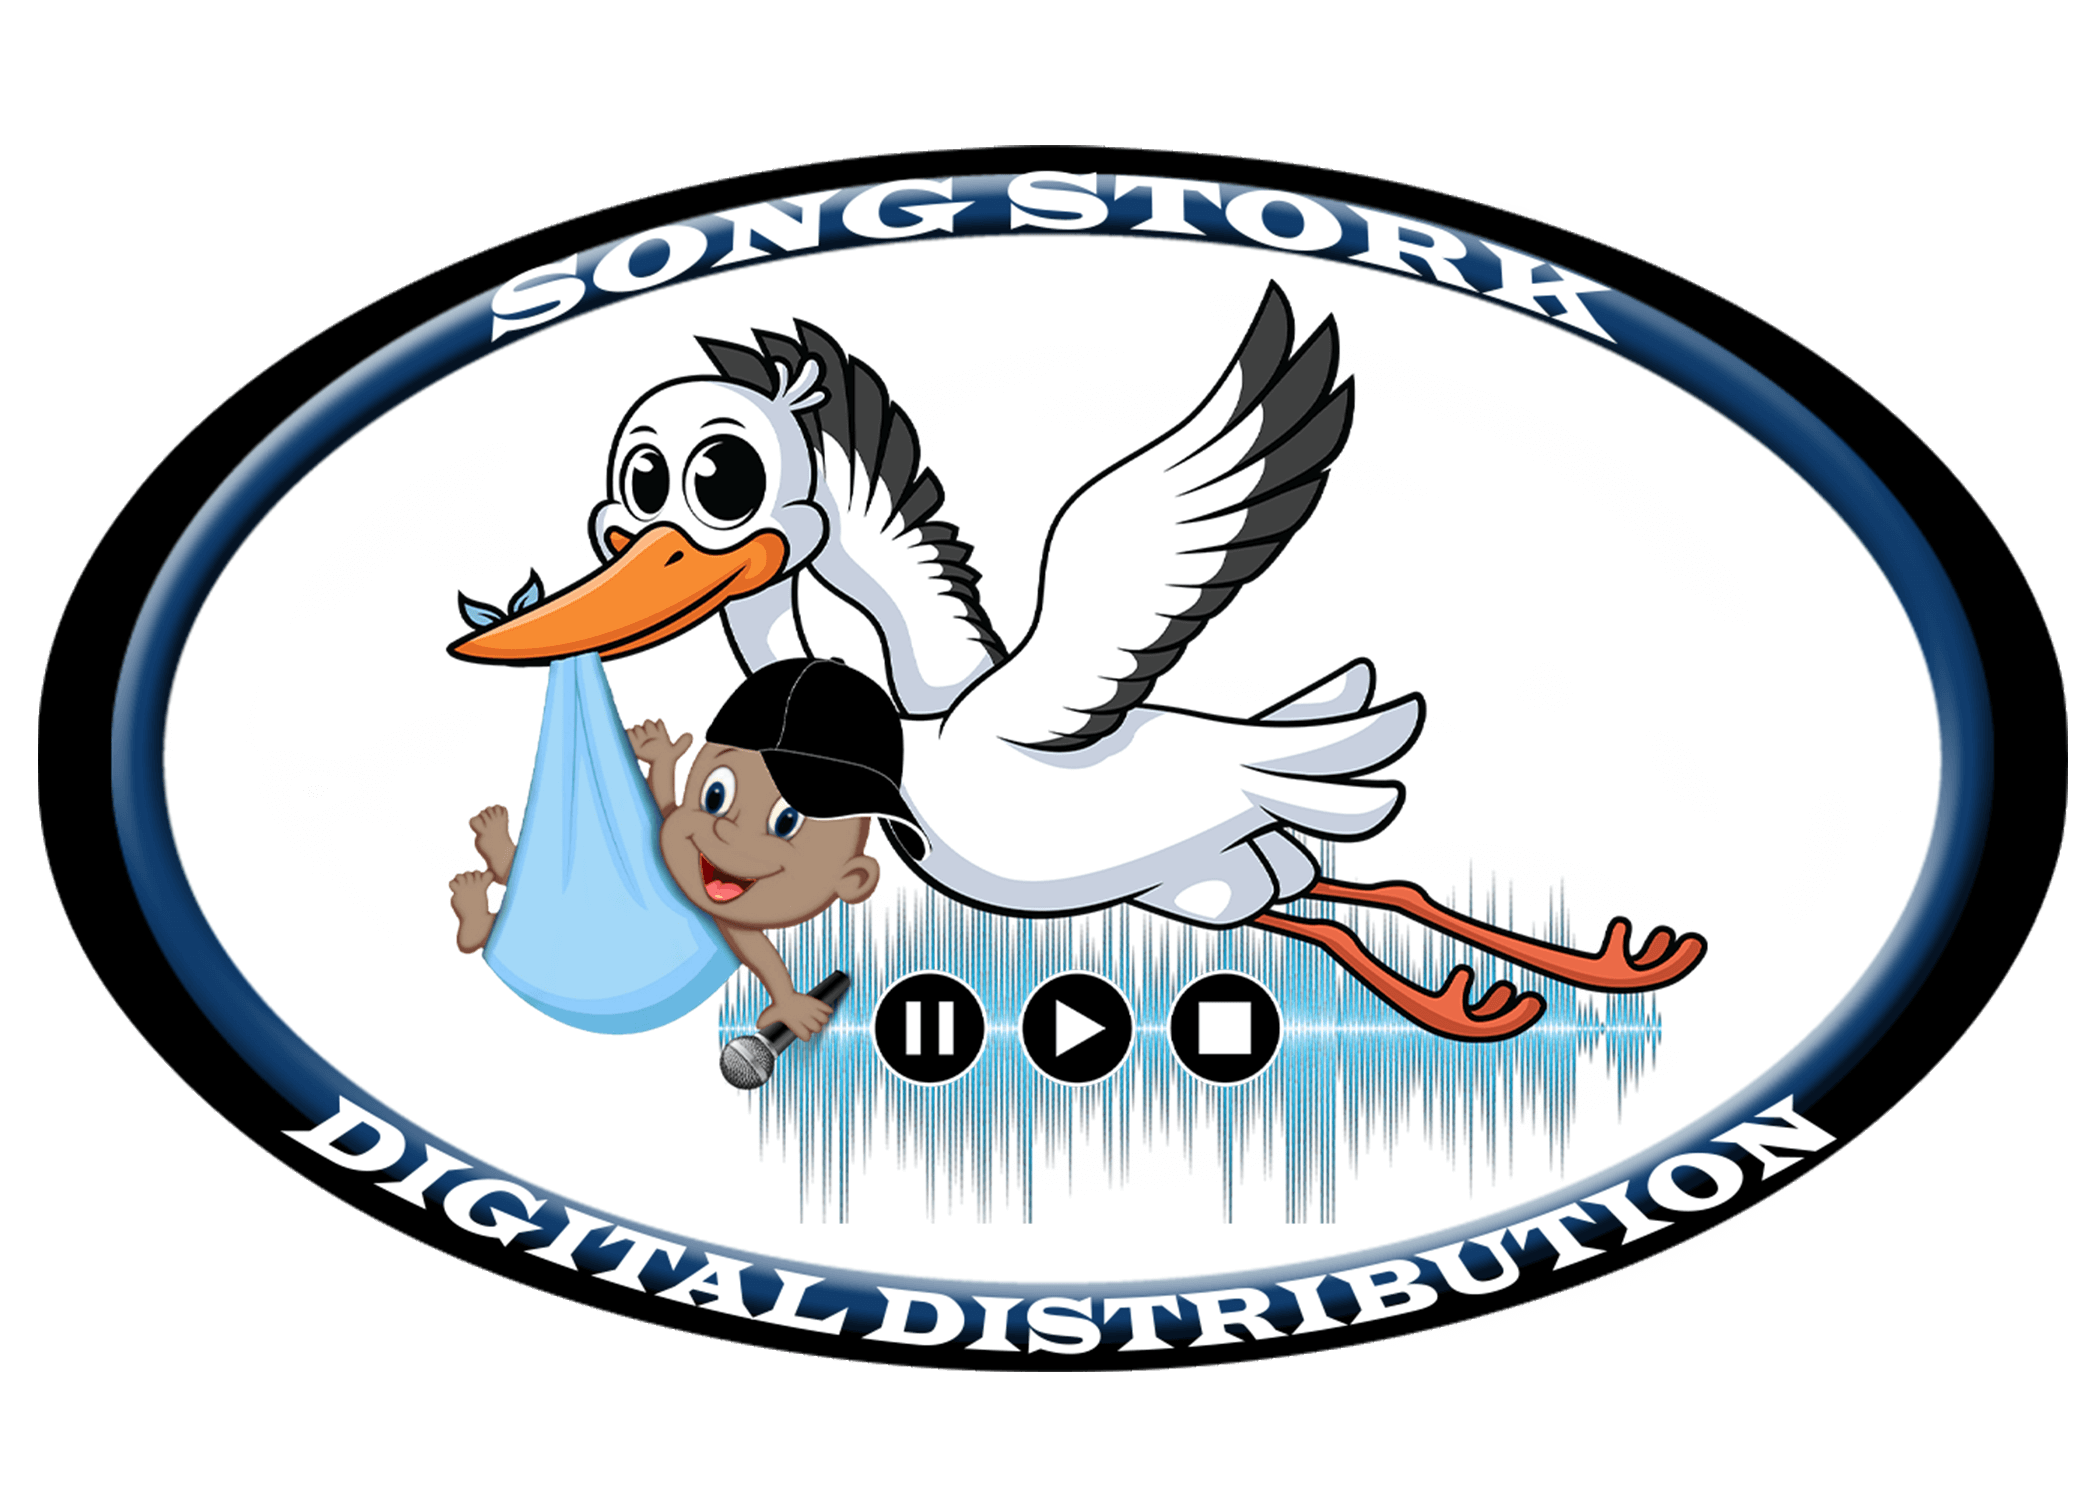 Song Stork - Worldwide Digital Distribution and Music Publishing!